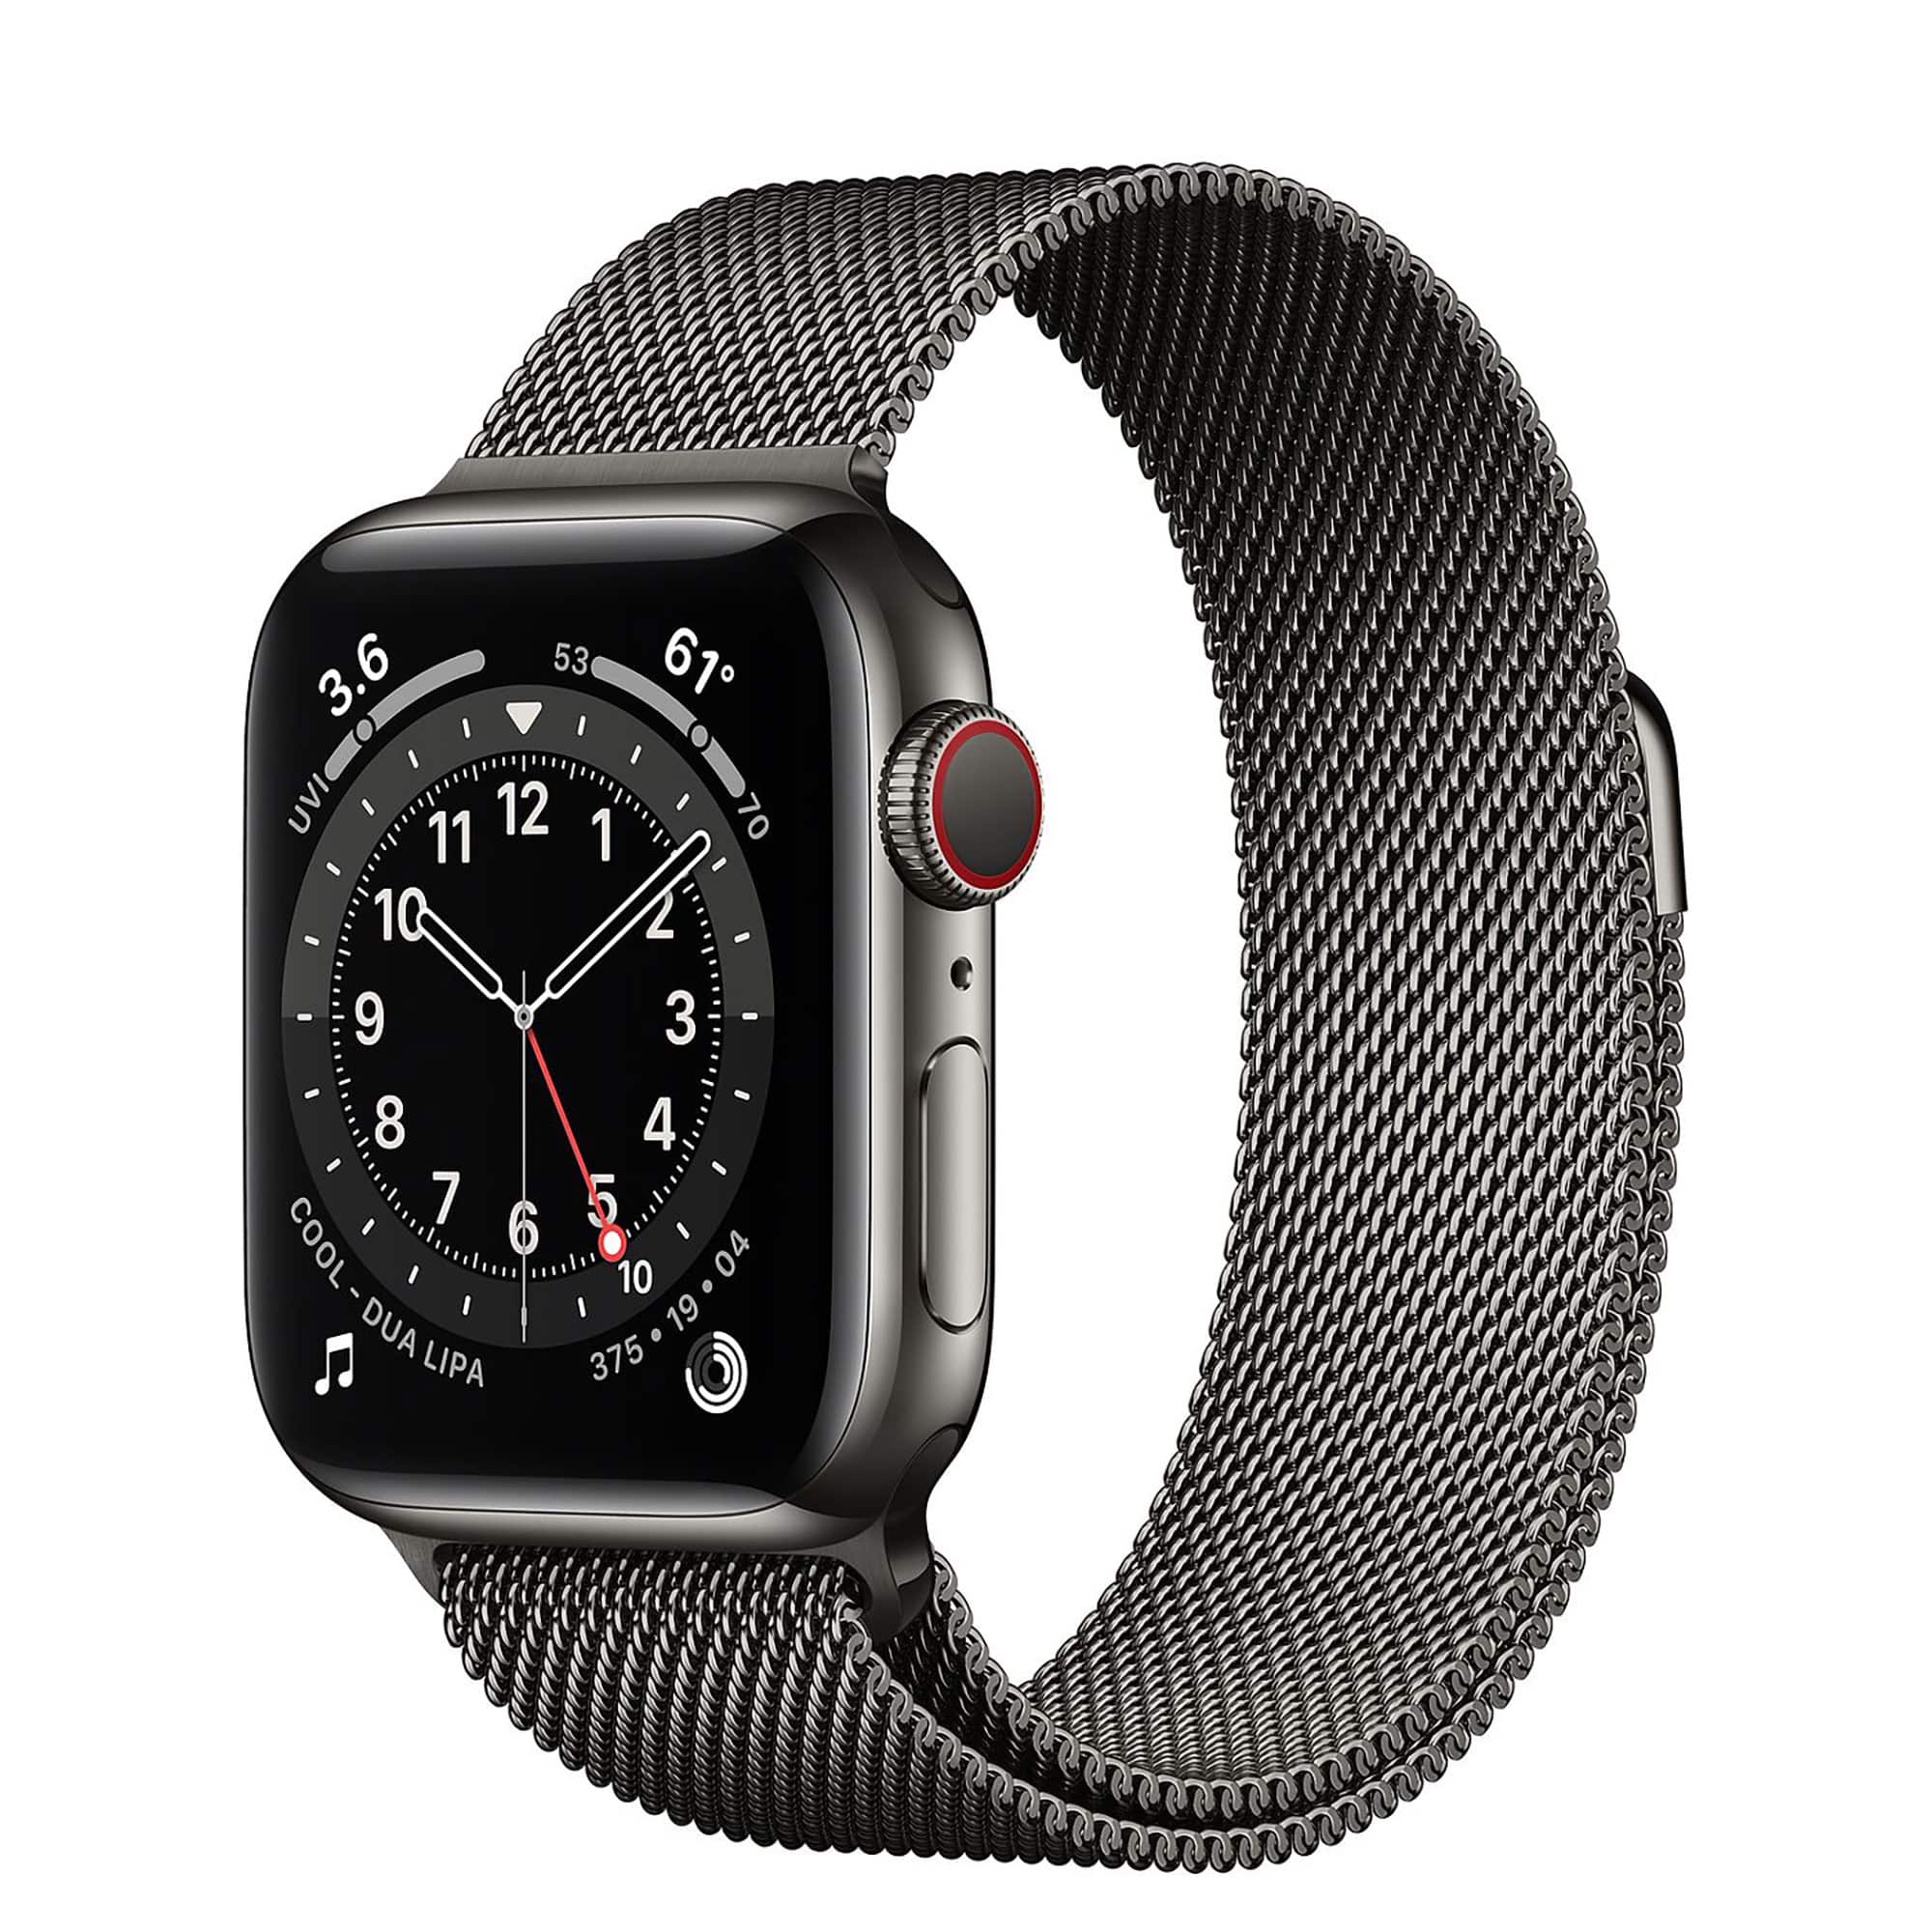 Apple Watch Series 6 Graphite Stainless Steel Case with Graphite Stainless Steel Case Apple Watch